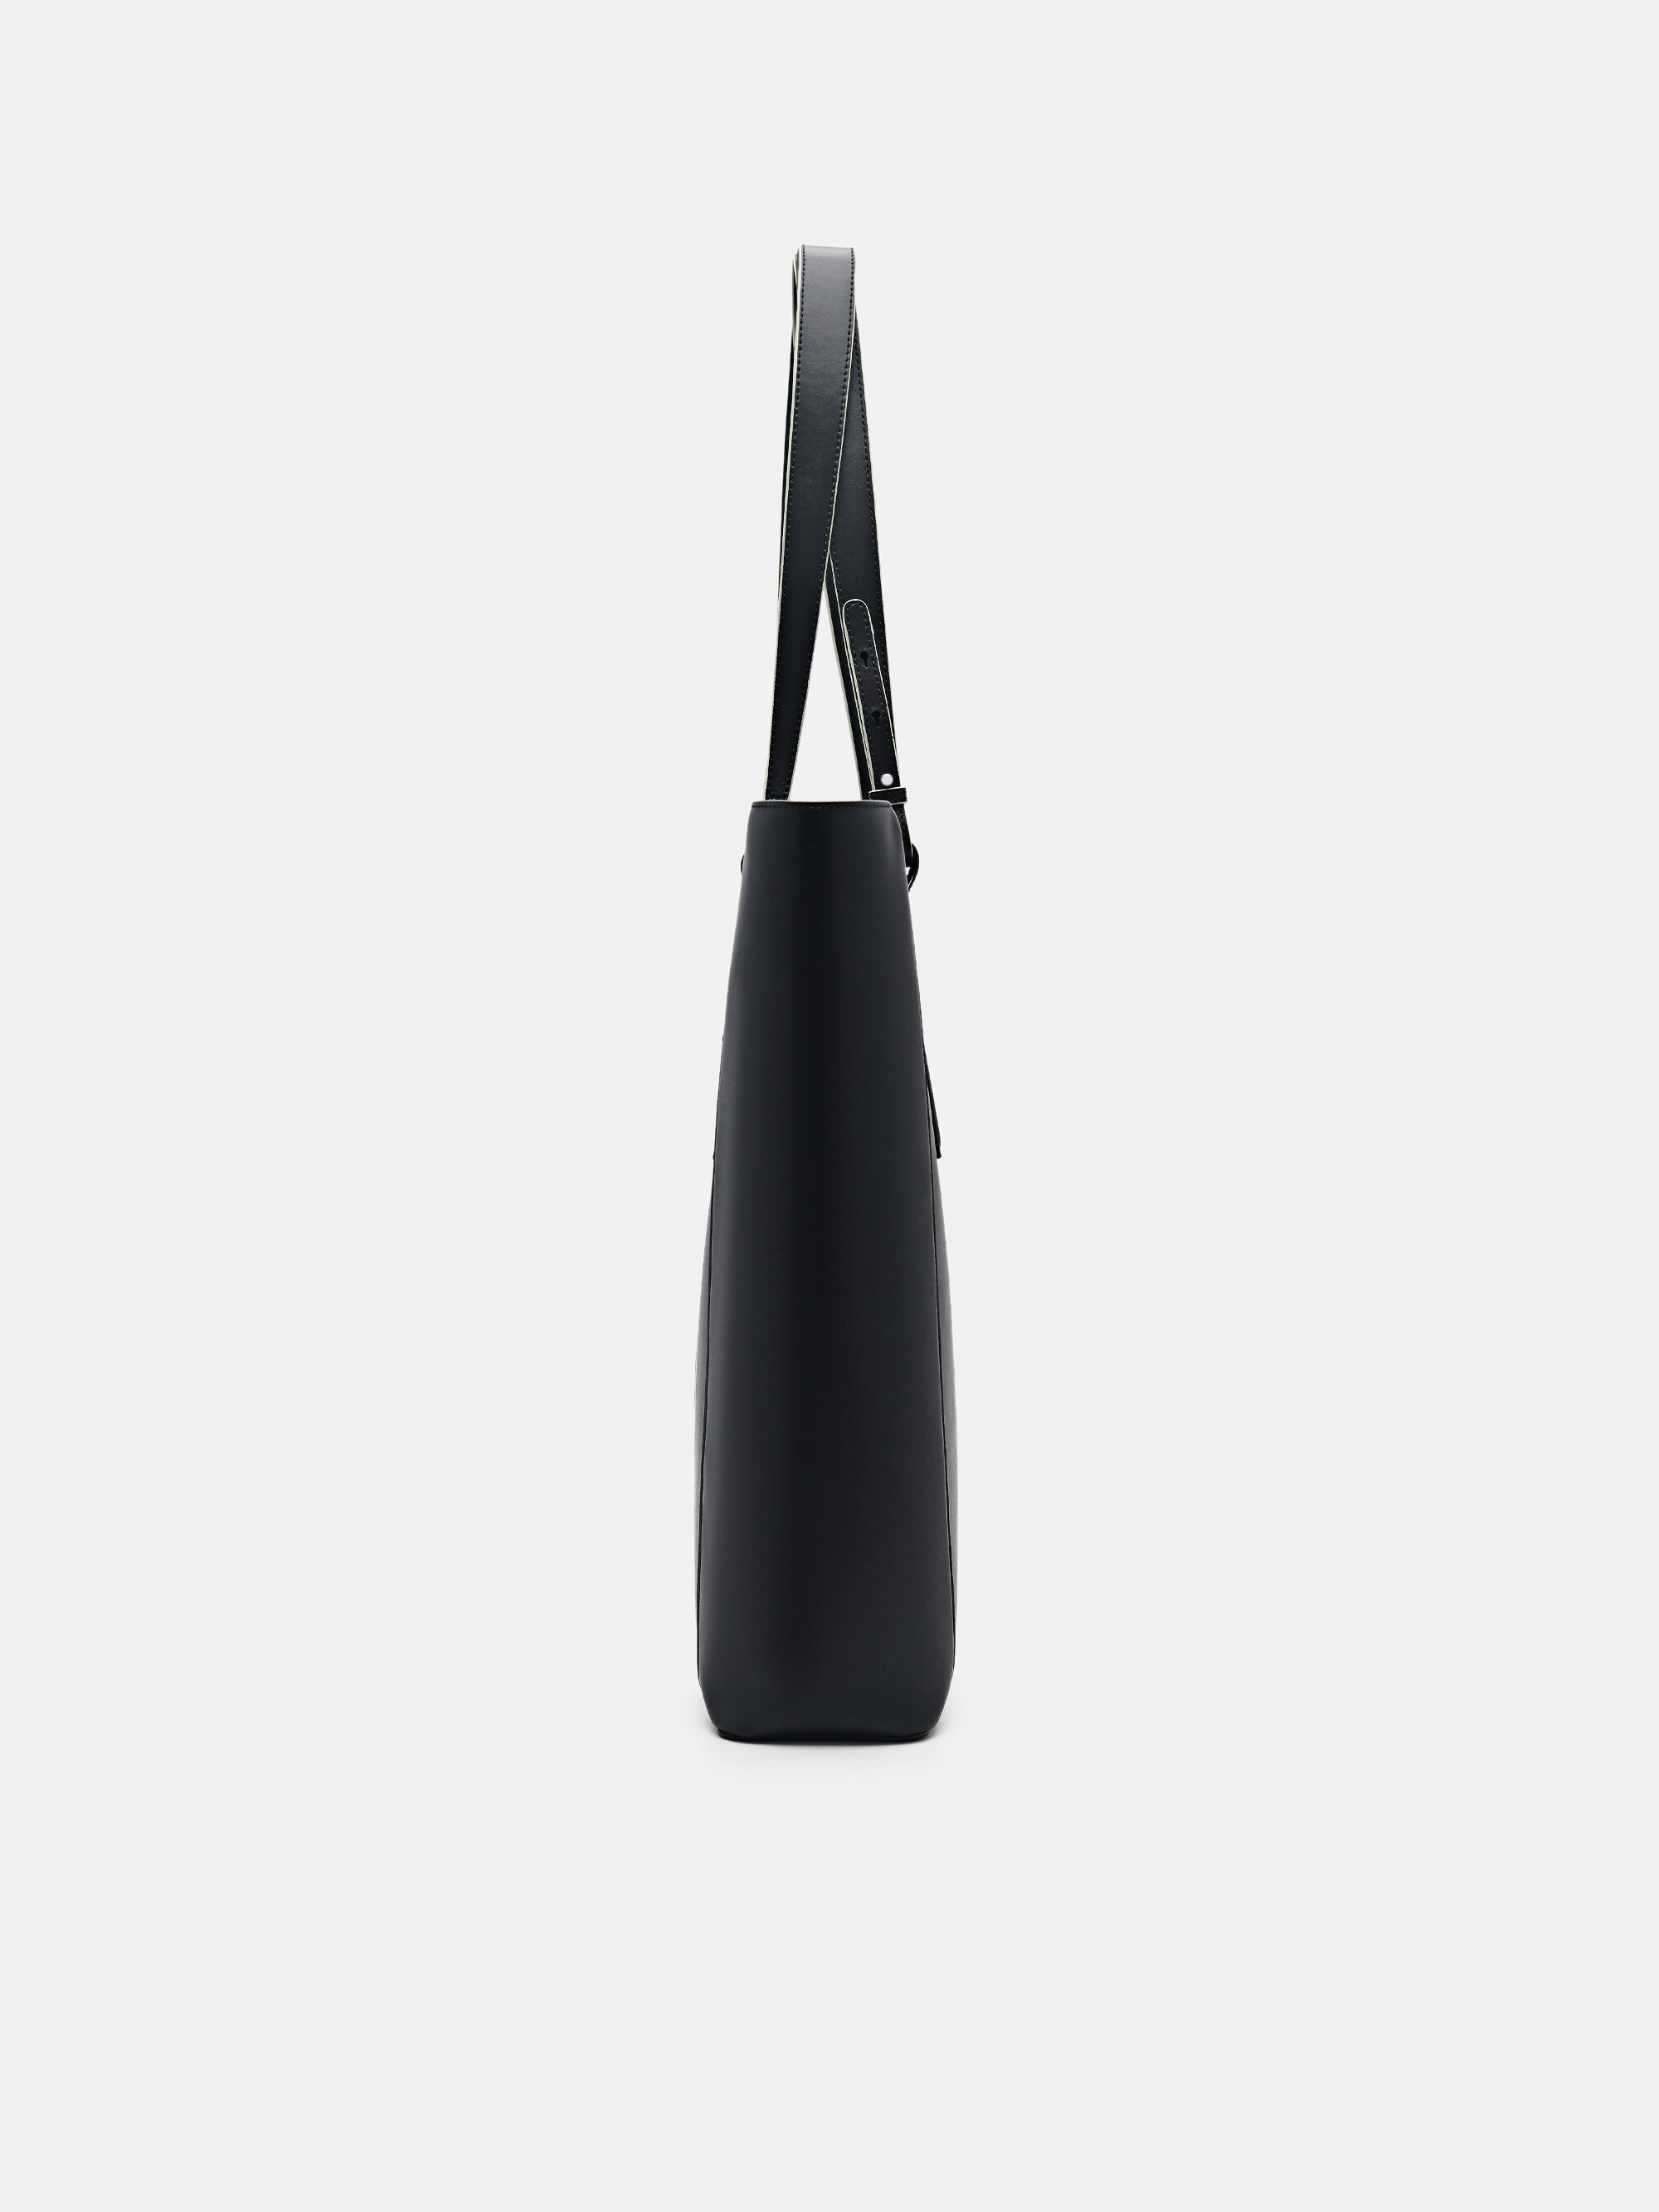 PEDRO Kane Sling Bag Size: W21 x H14.5 x D6 cm Colors: Black, Taupe &  Cognac Price: 1499 only #lushpickspreorder